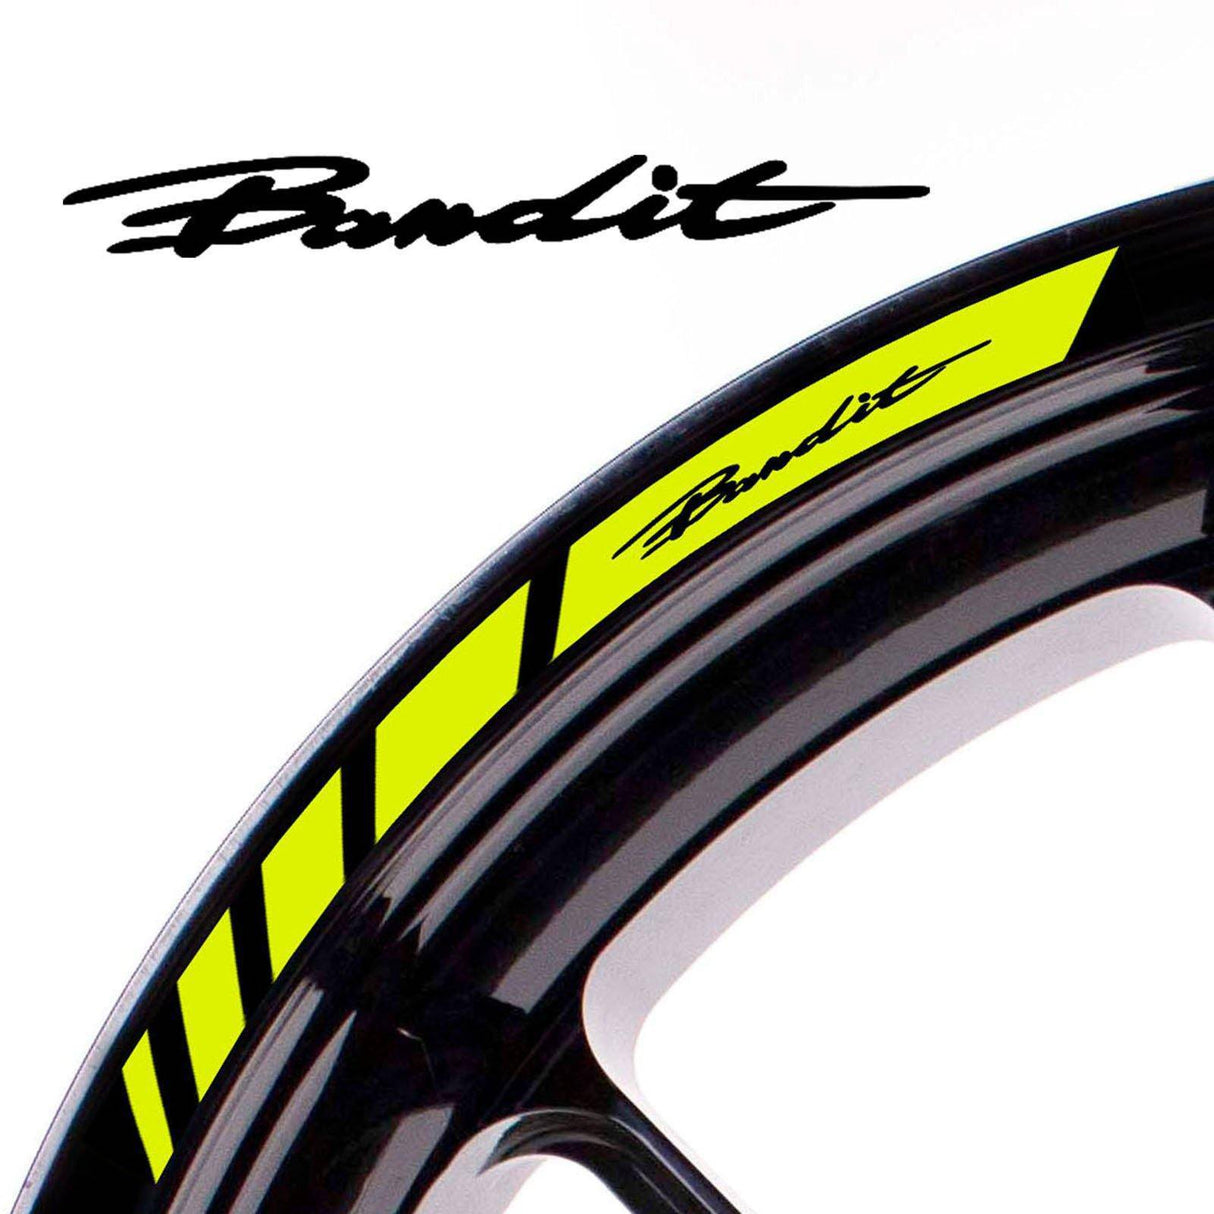 For Suzuki Bandit Logo 17 inch Rim Wheel Stickers MM01B Rim Edge Tapes.